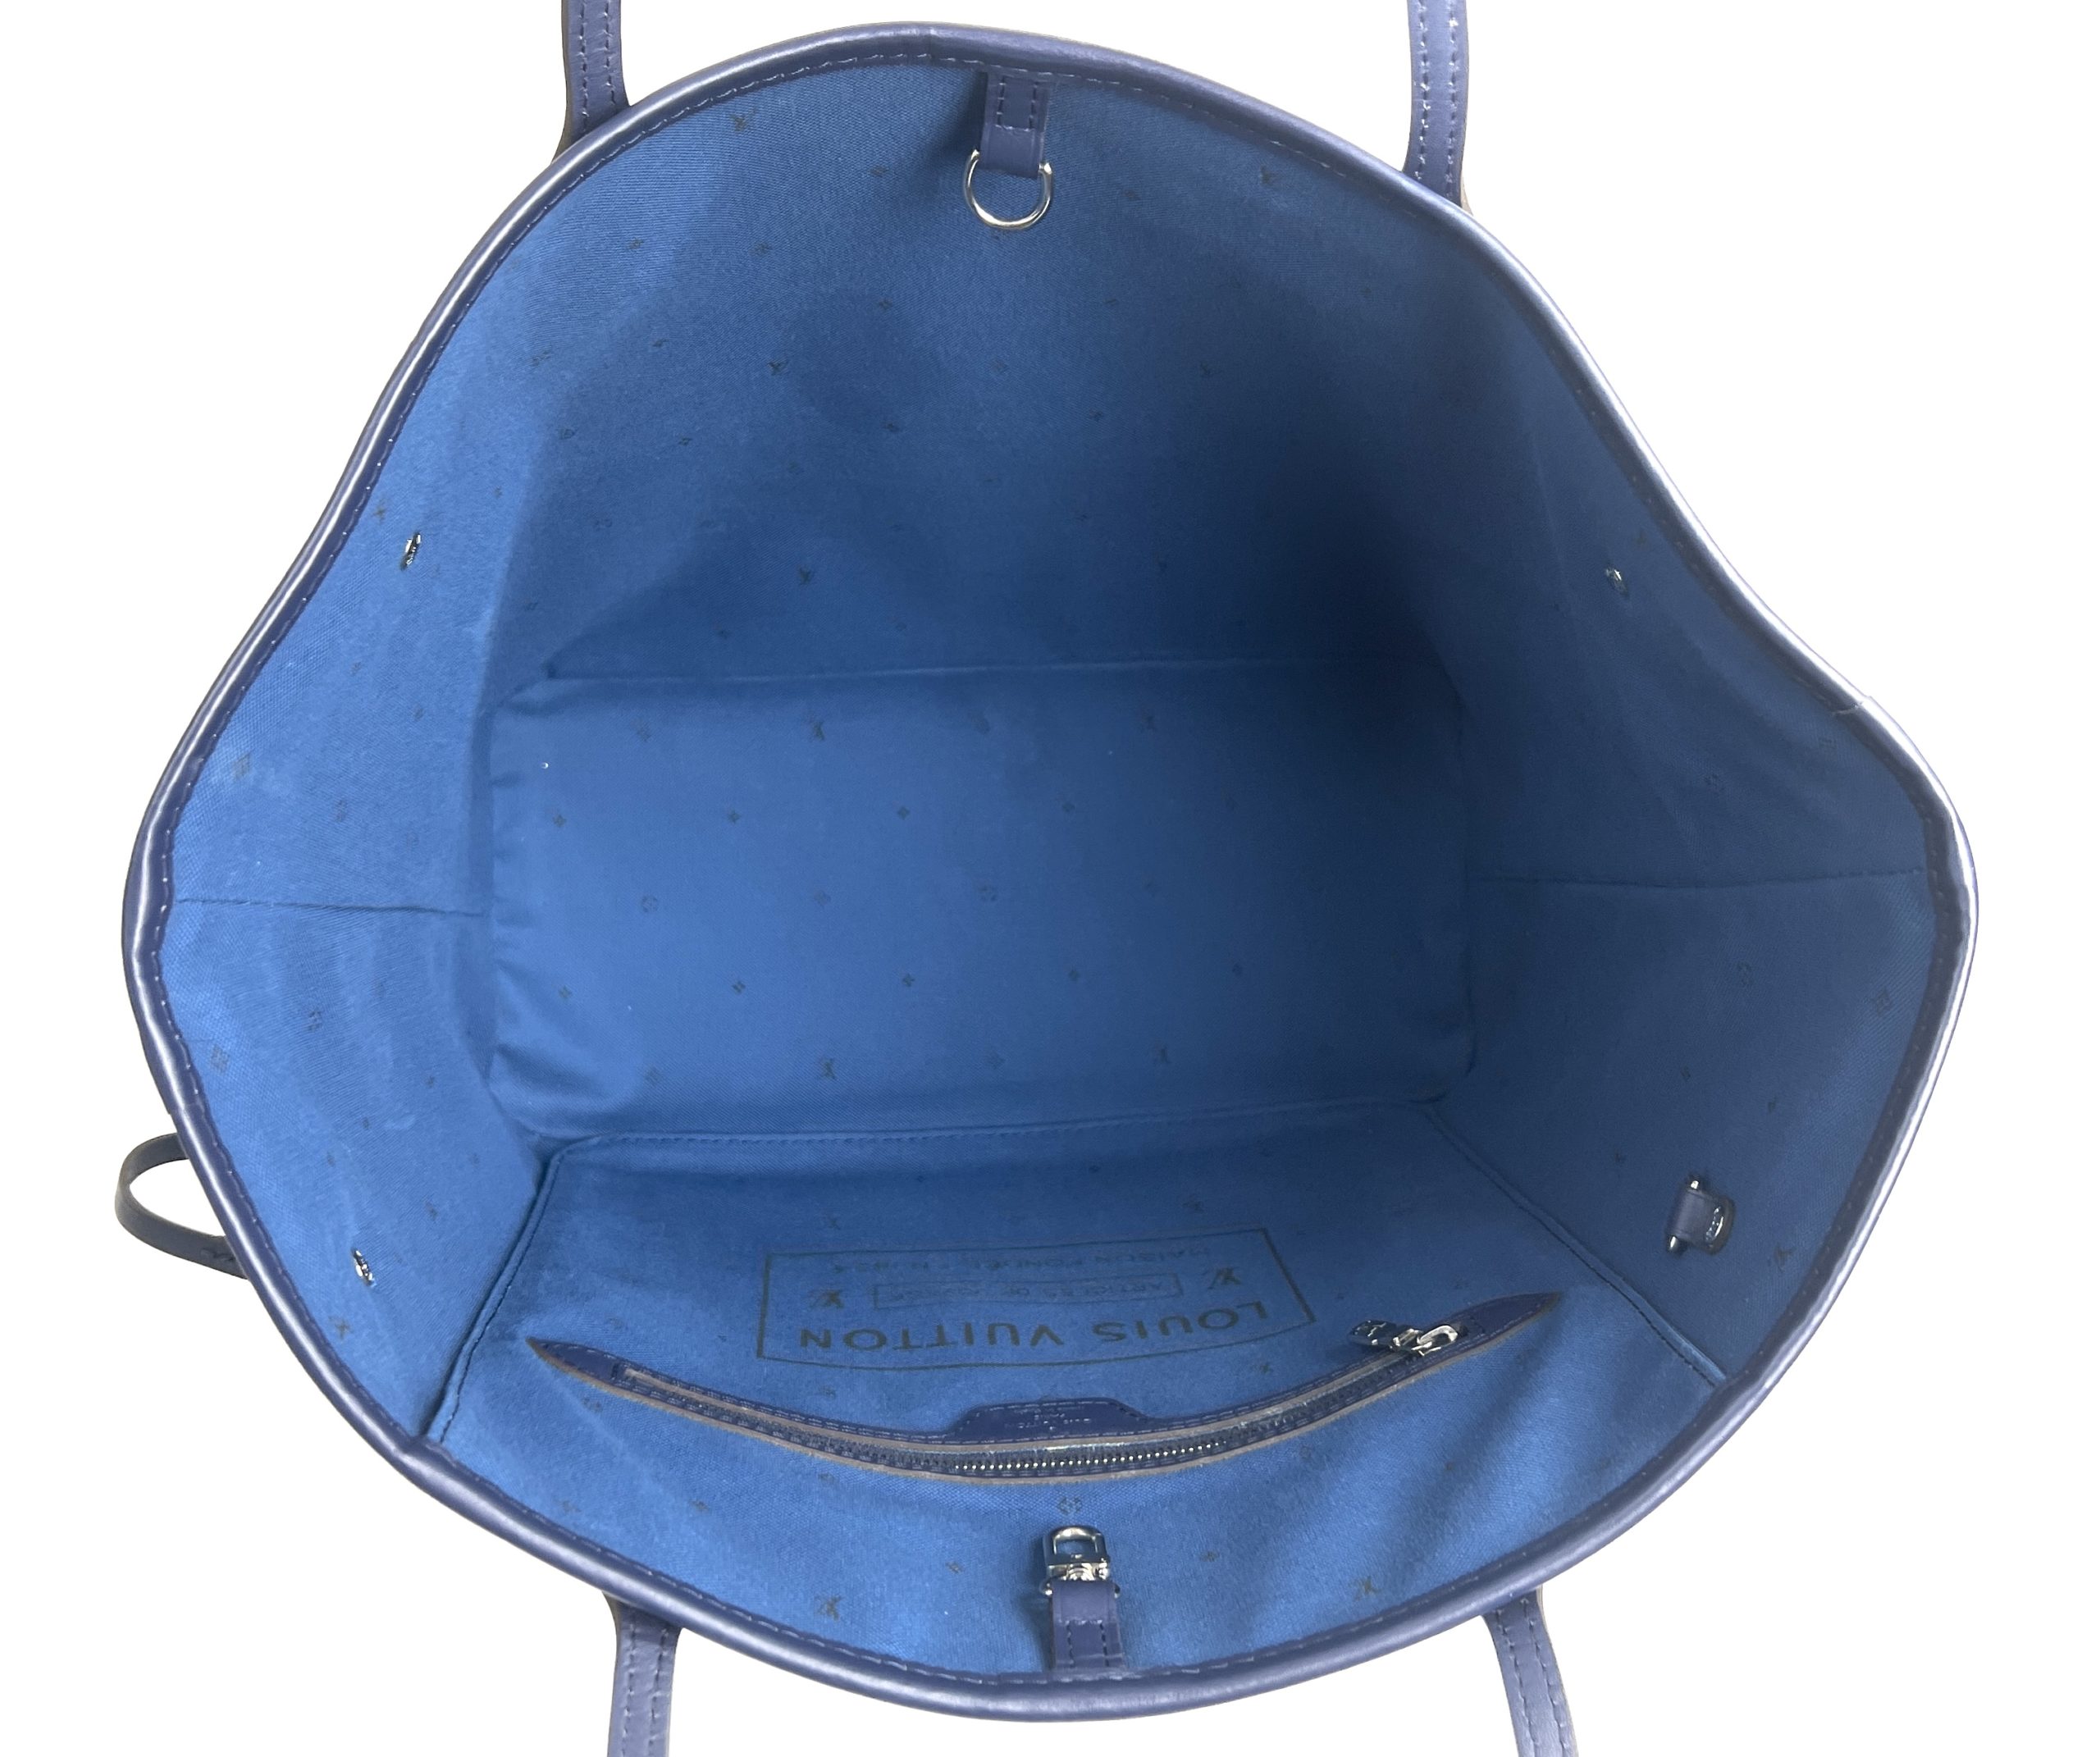 Buy Louis Vuitton LV Escale Neverfull MM Bleu Limited Edition Bags Handbags  Purse at